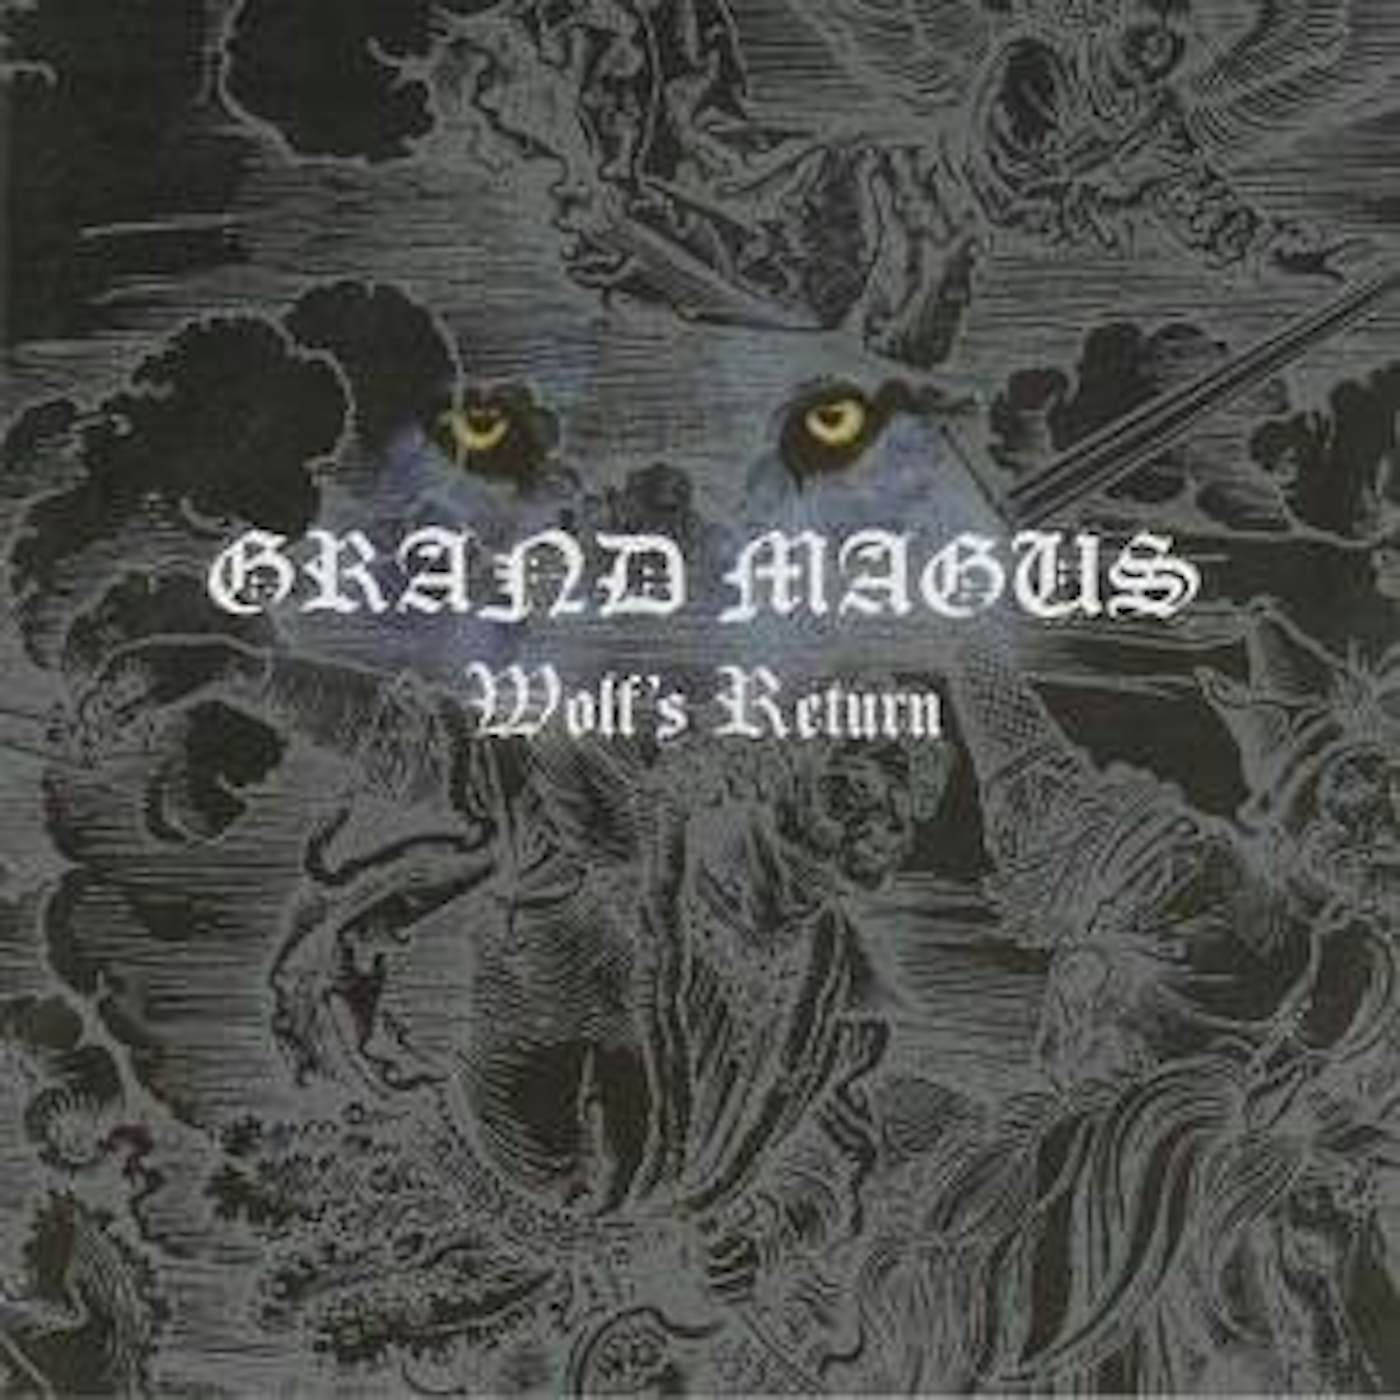 Grand Magus Wolf's Return Vinyl Record